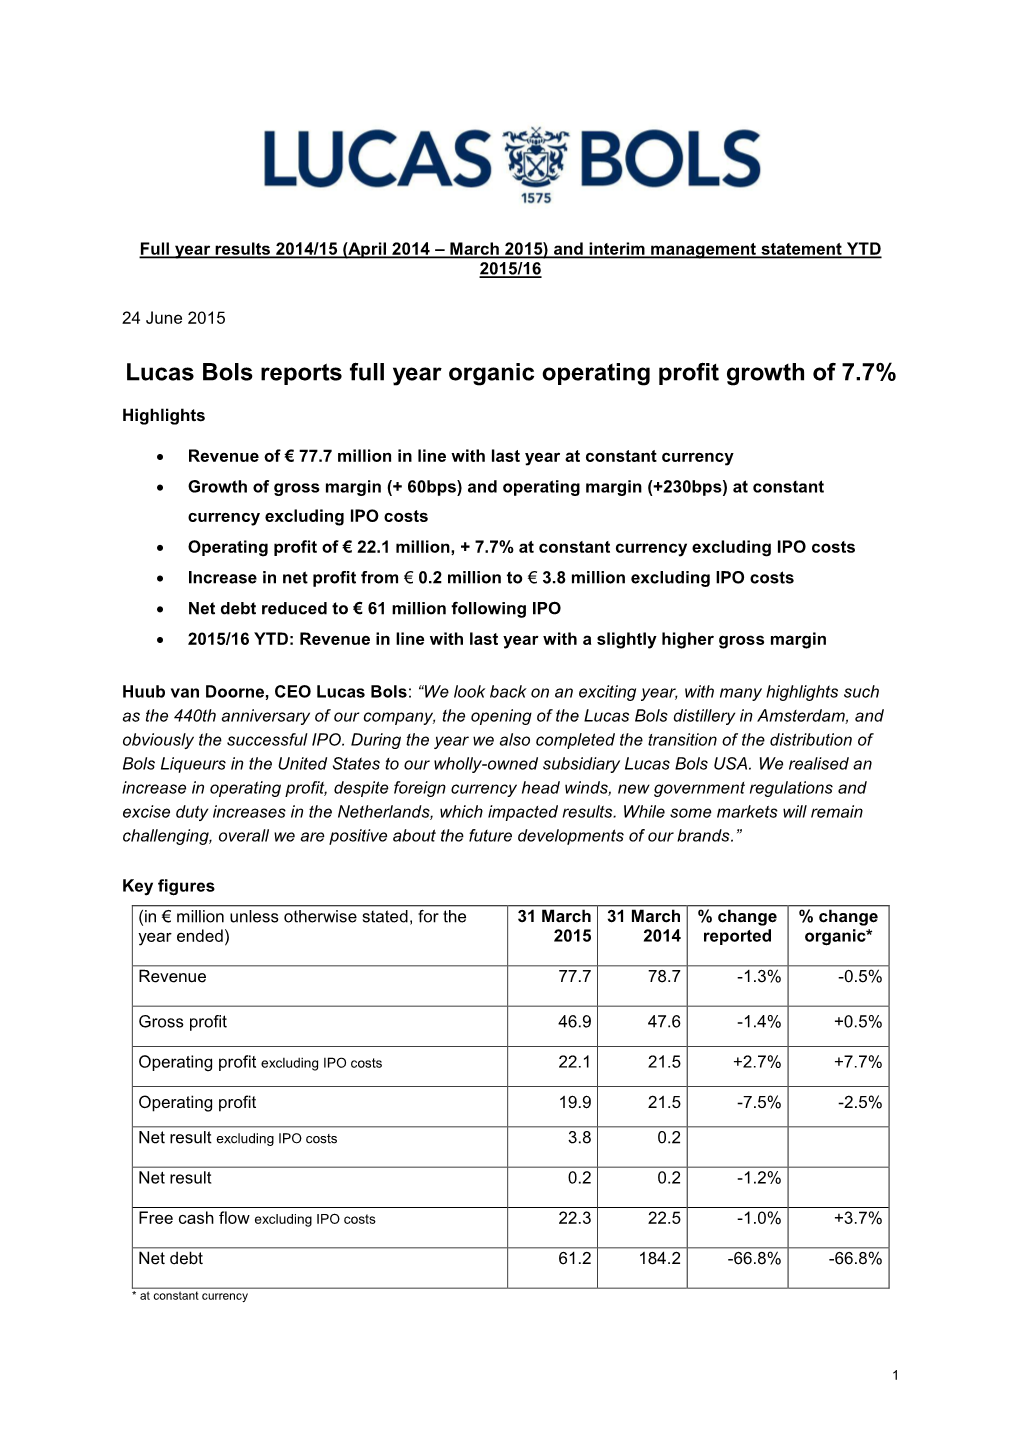 Lucas Bols Reports Full Year Organic Operating Profit Growth of 7.7%